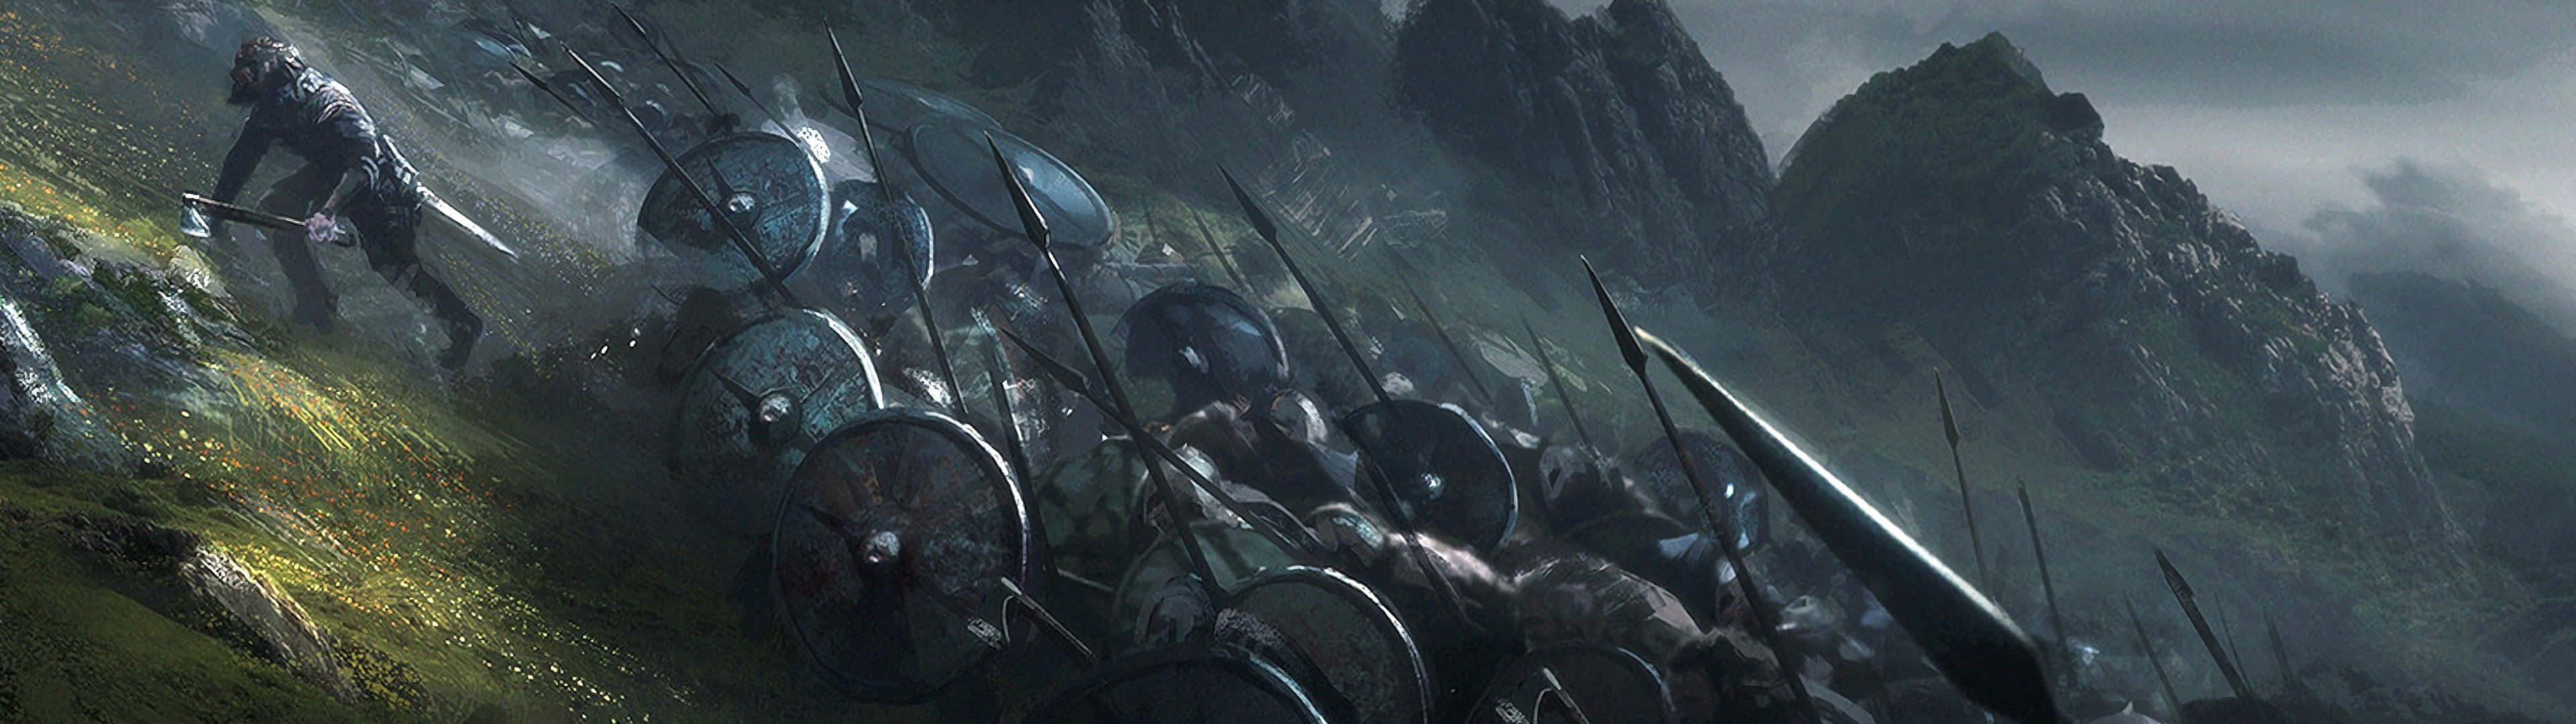 A fierce Viking warrior marching into battle